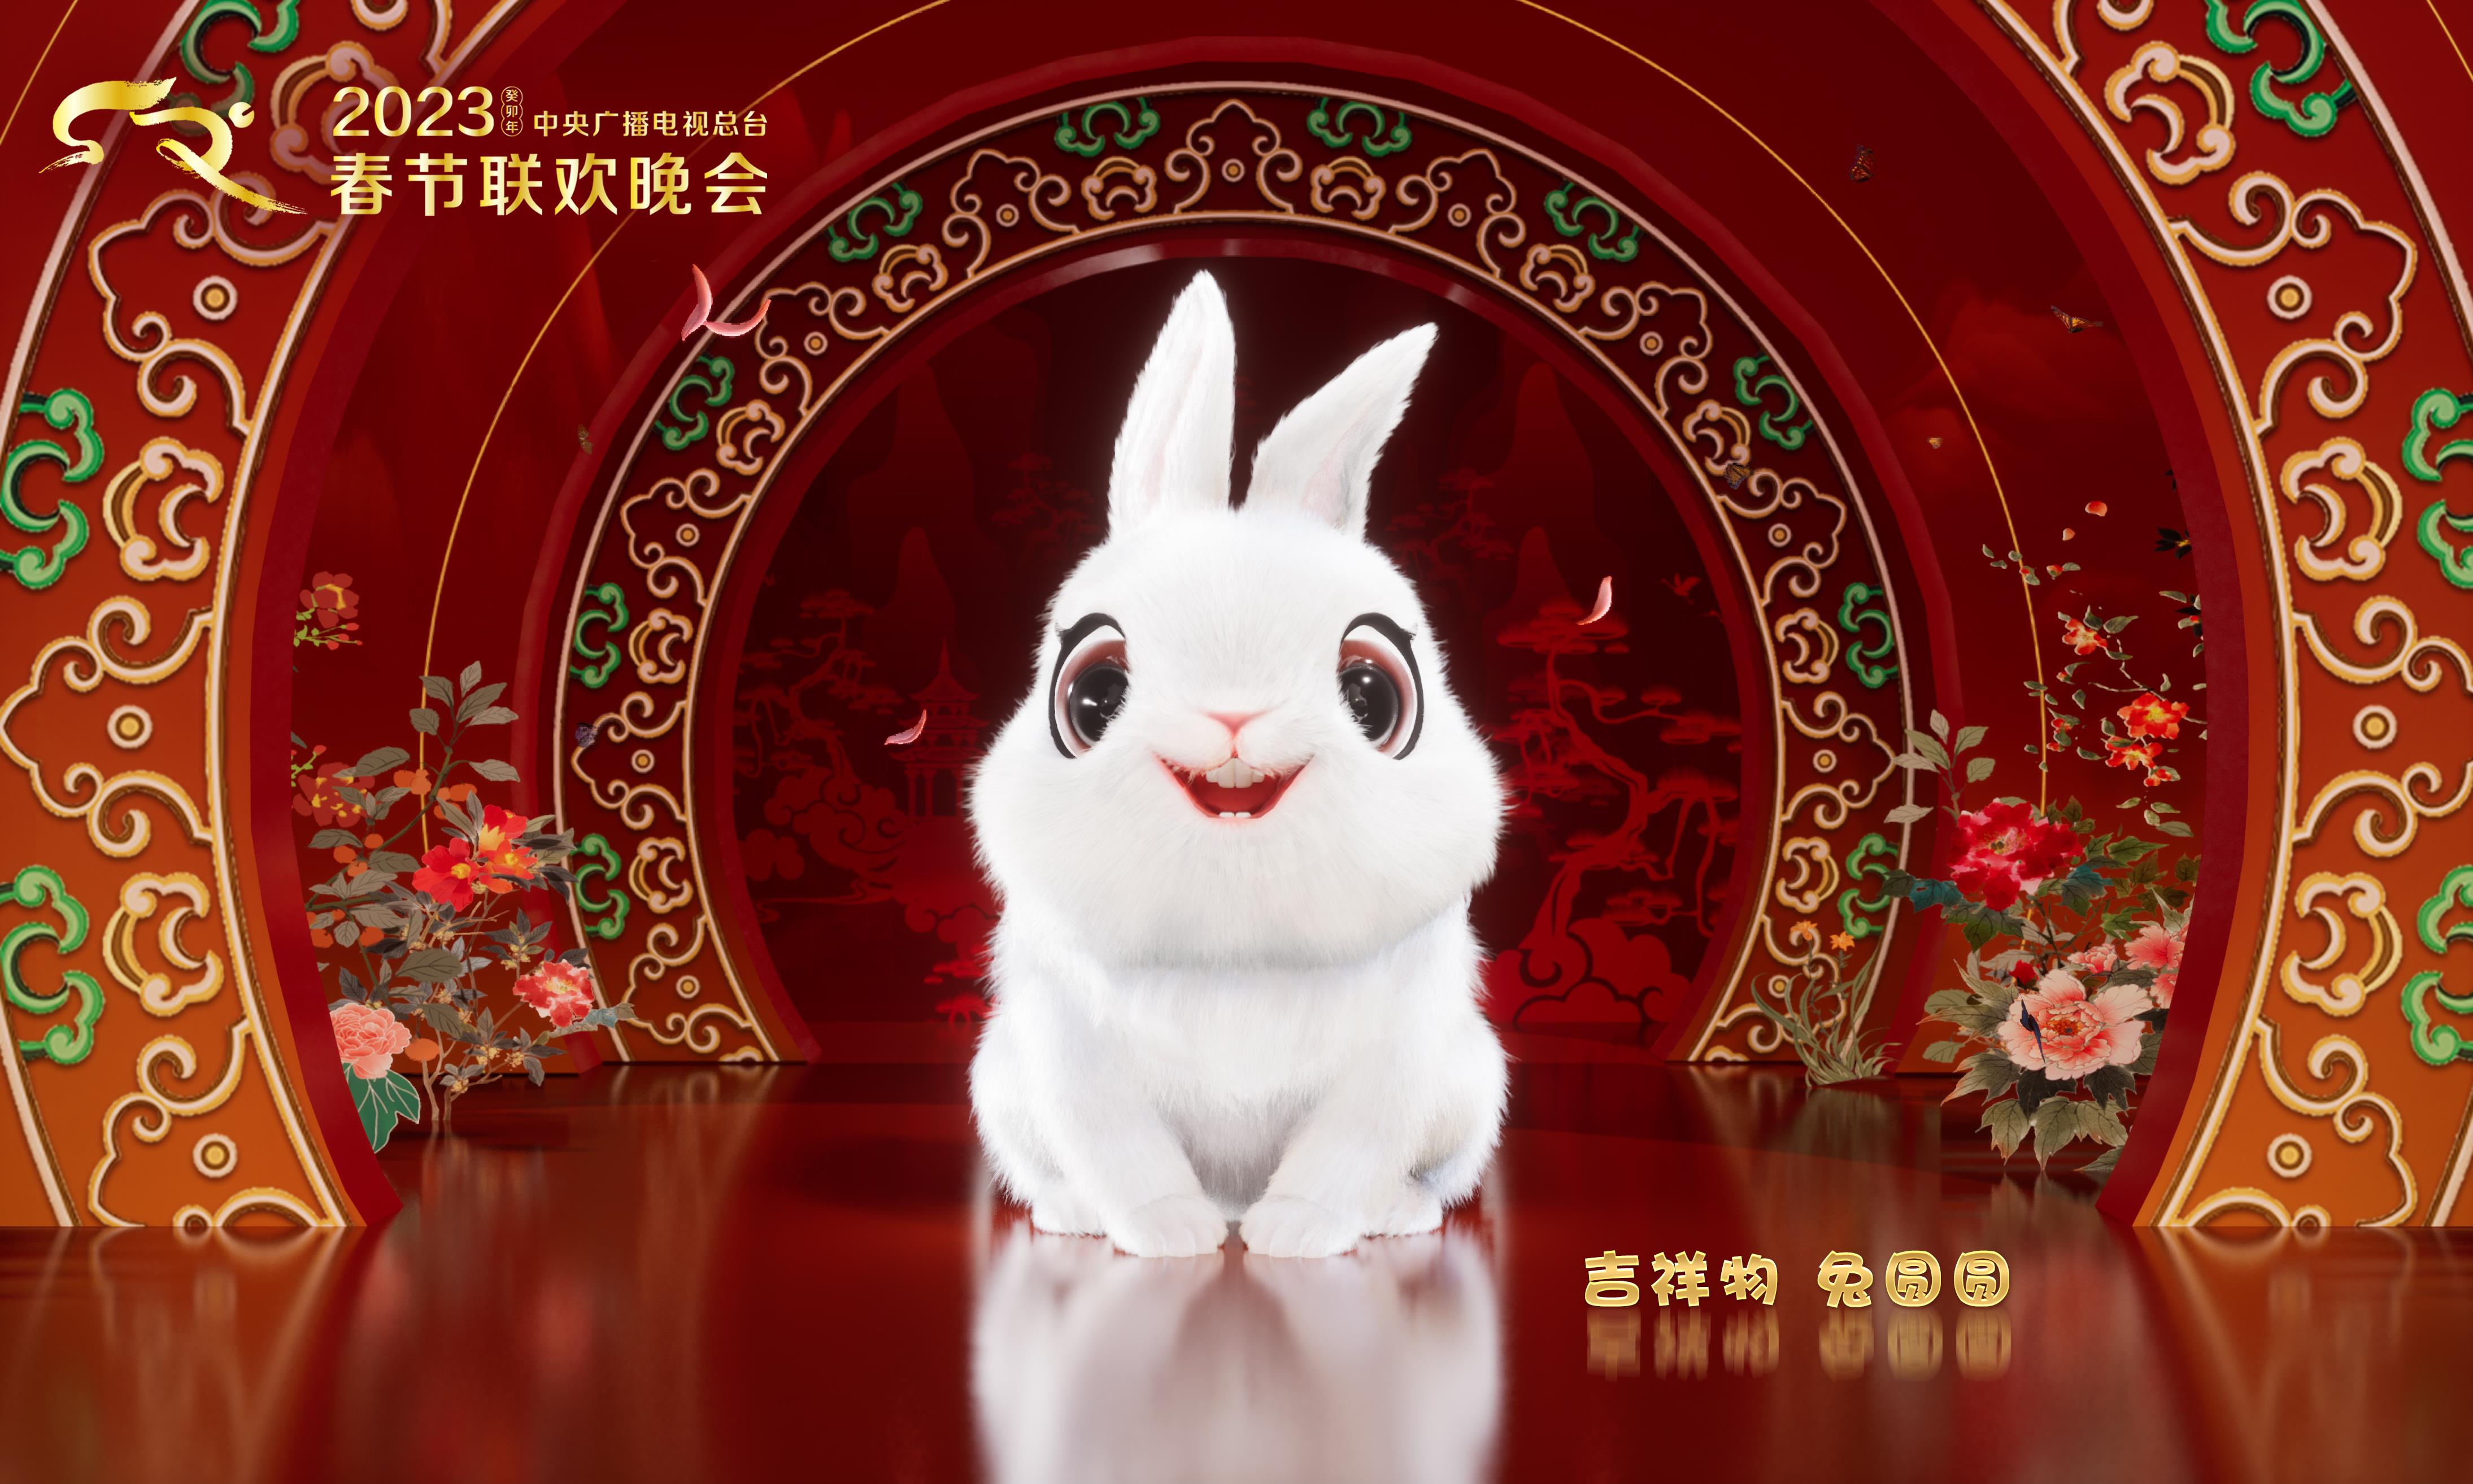 2023 Spring Festival Gala official mascot image "Tu Yuanyuan." /CMG